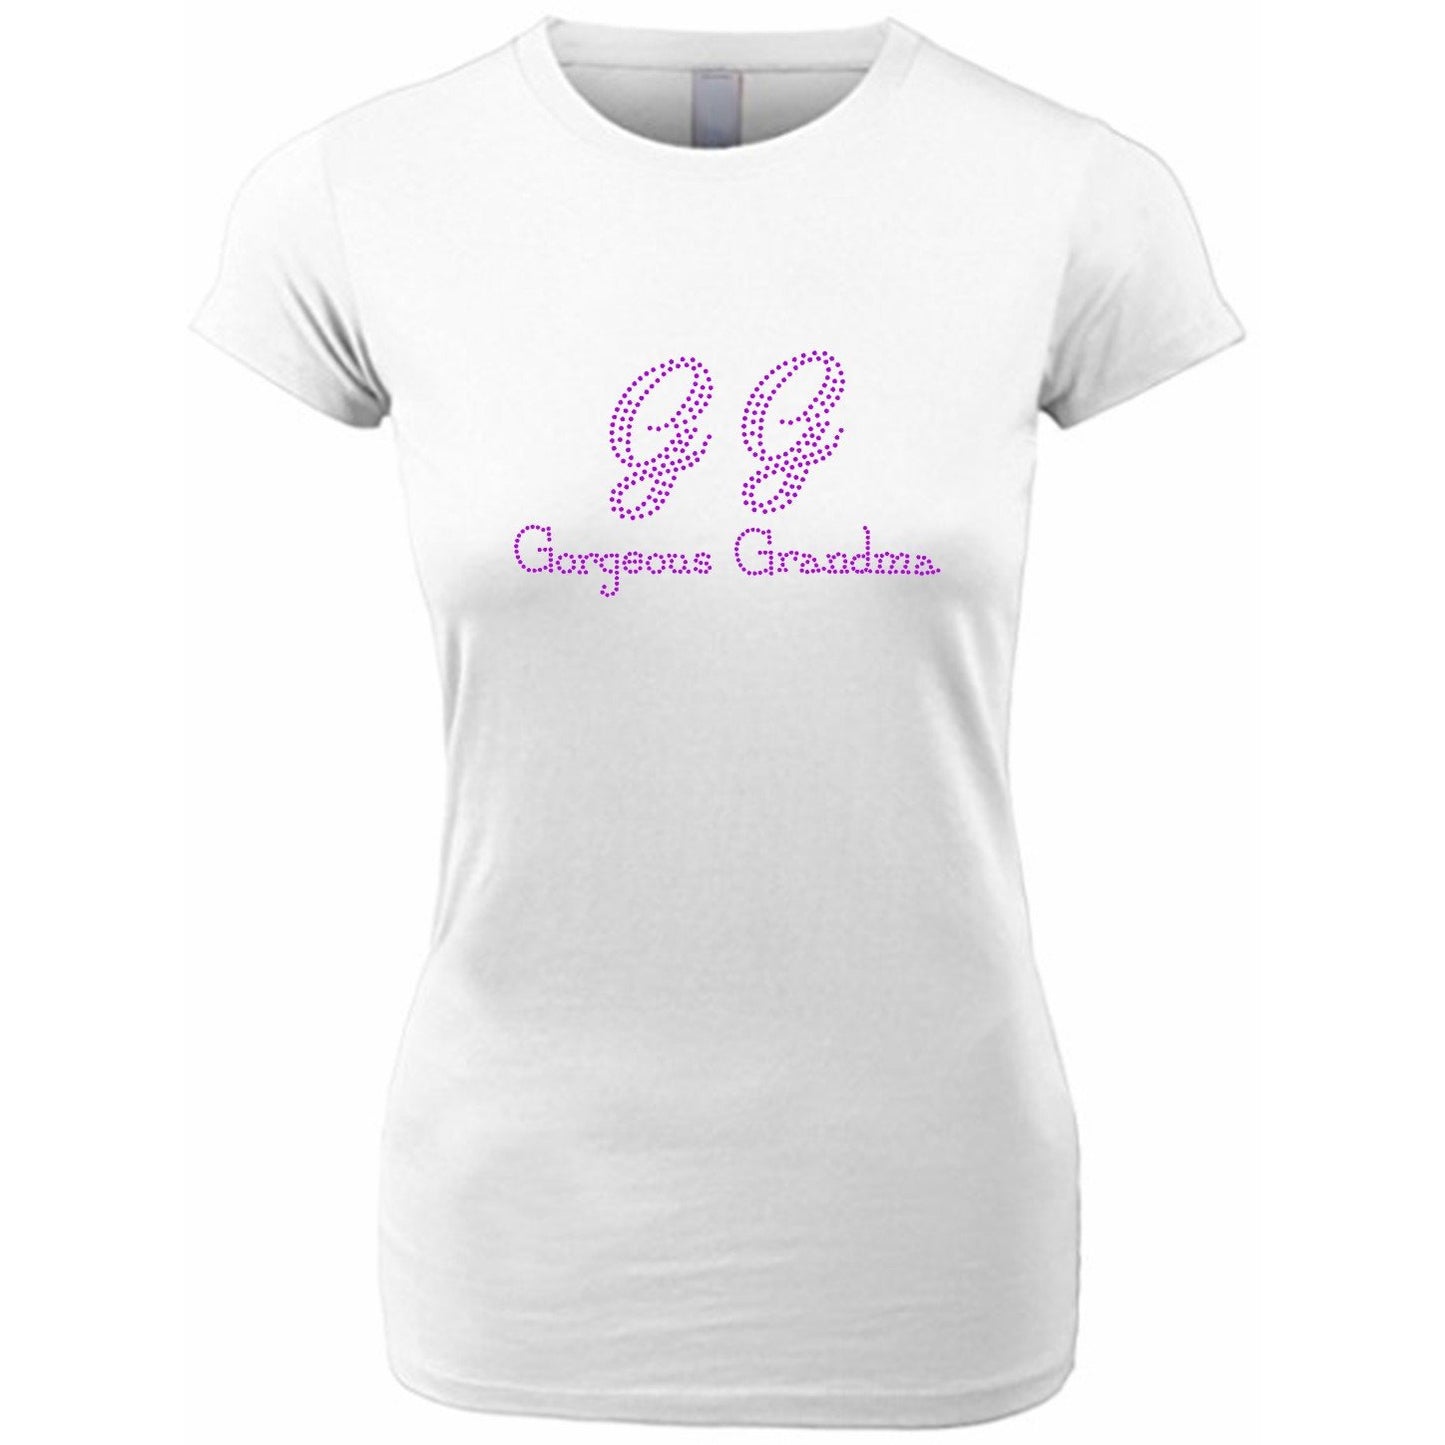 GG Gorgeous Grandma Rhinestone T Shirt